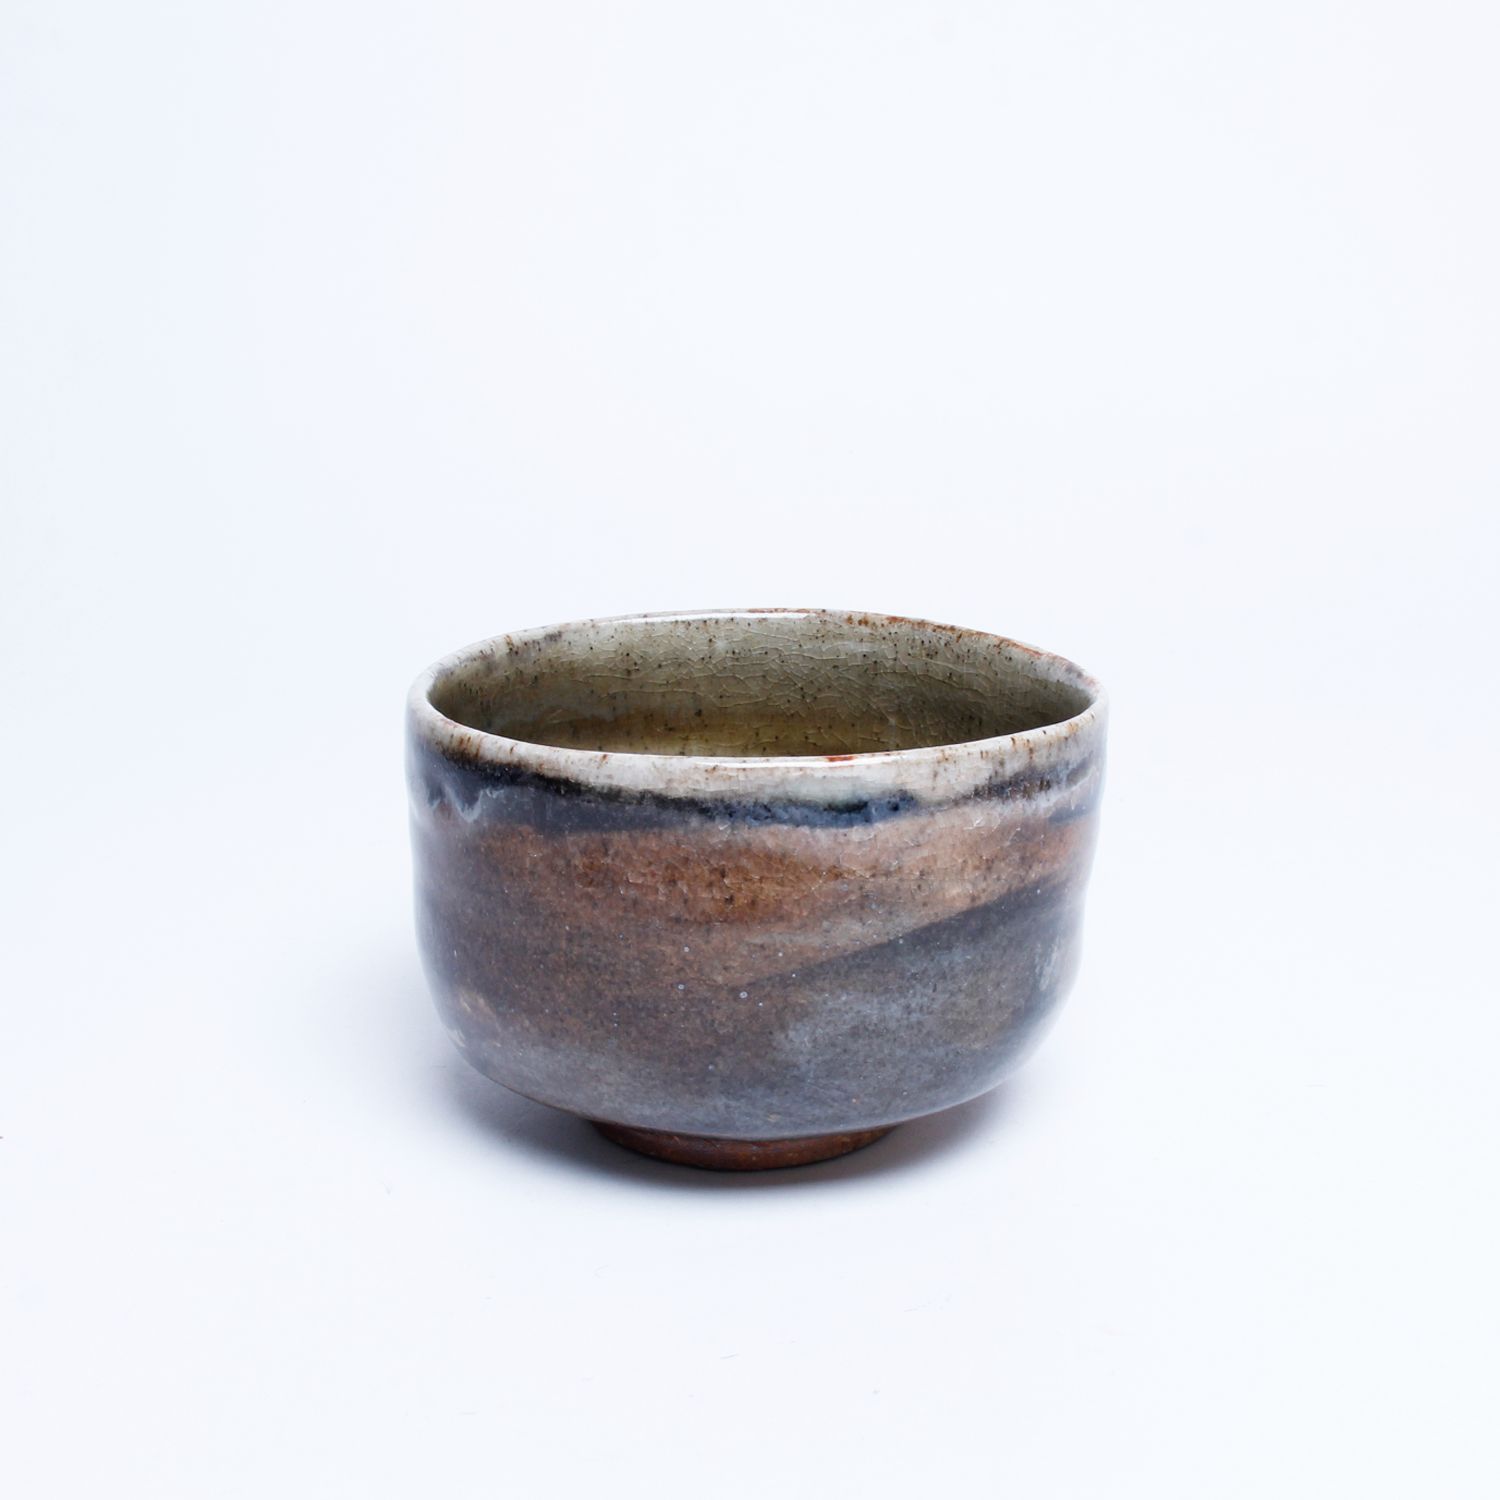 John Ikeda: Tea Bowl Product Image 1 of 2